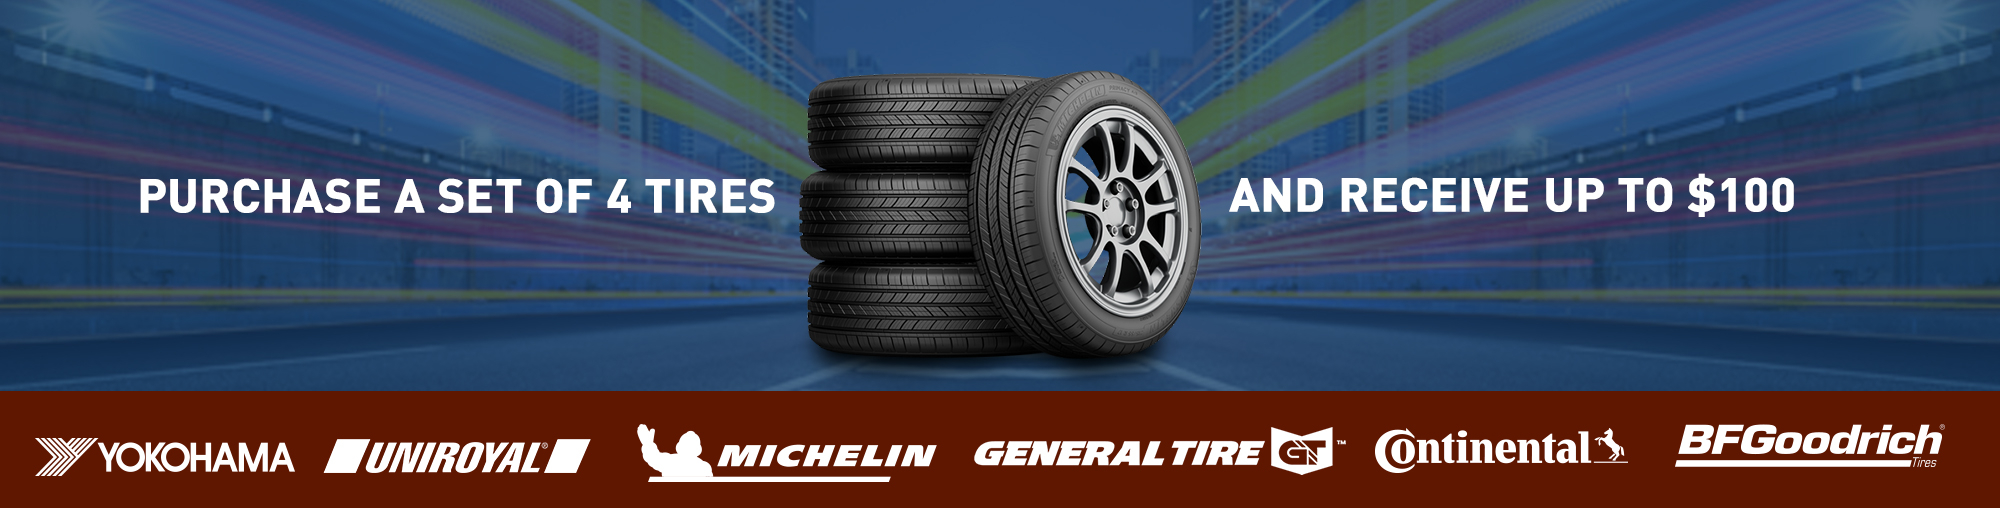 Michelin Tire Online Rebate